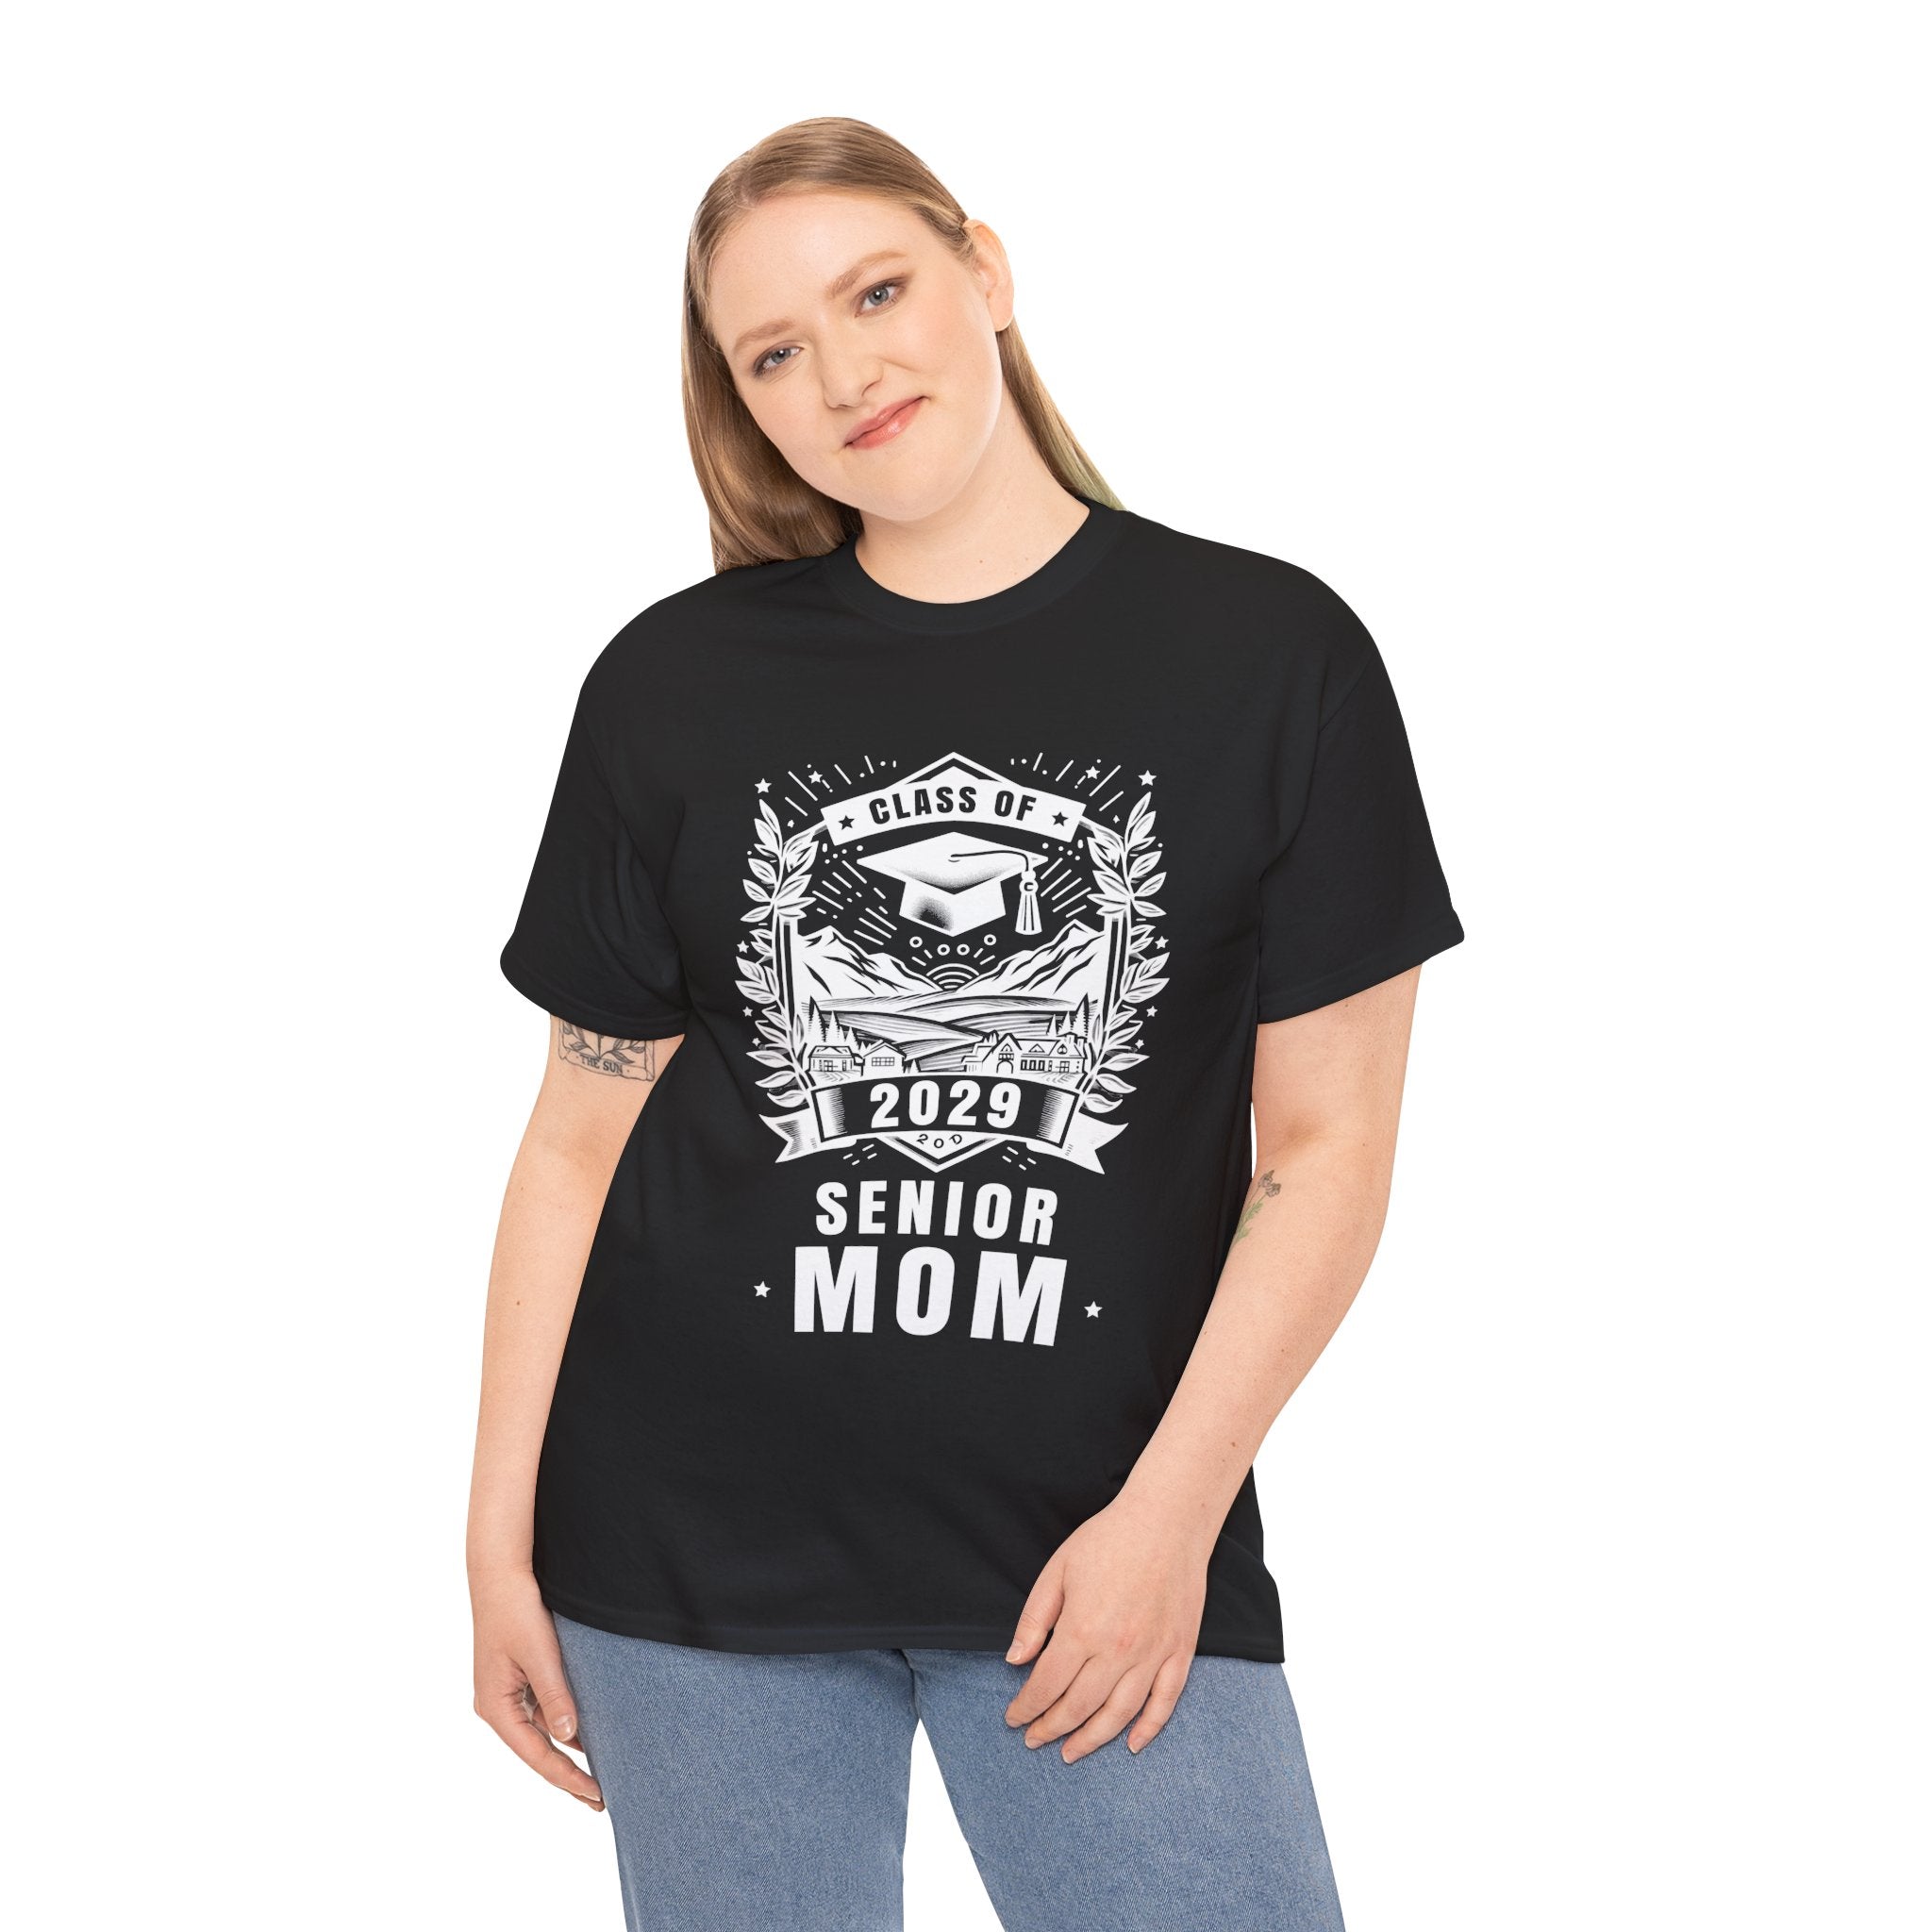 Senior Mom 29 Class of 2029 Back to School Graduation 2029 Tshirts Shirts for Women Plus Size